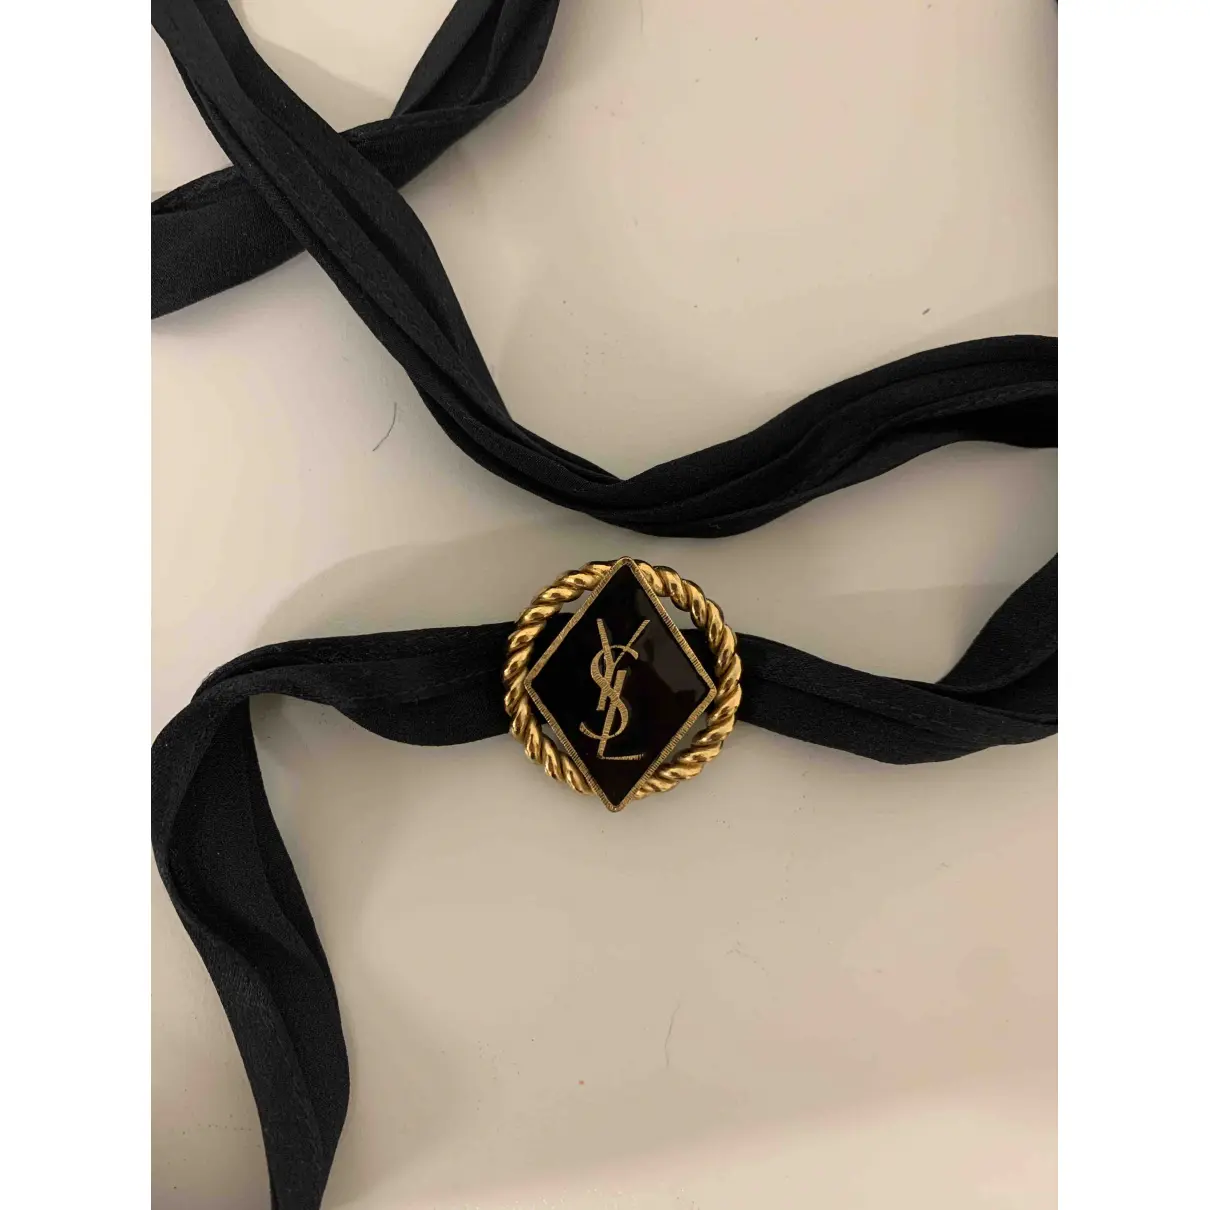 Buy Yves Saint Laurent Silk necklace online